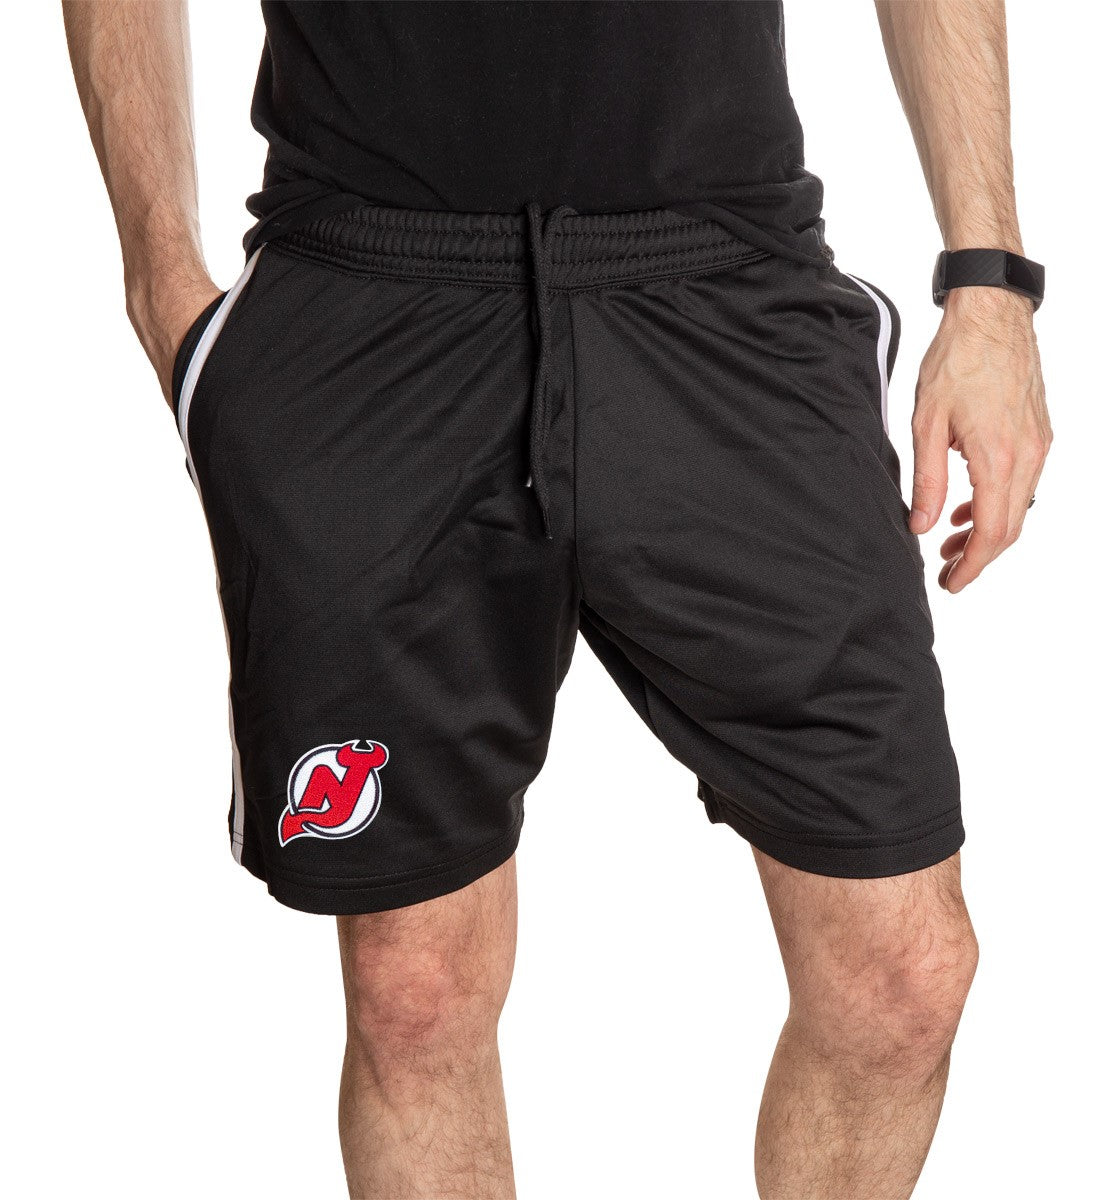 New Jersey Devils Two-Stripe Shorts for Men